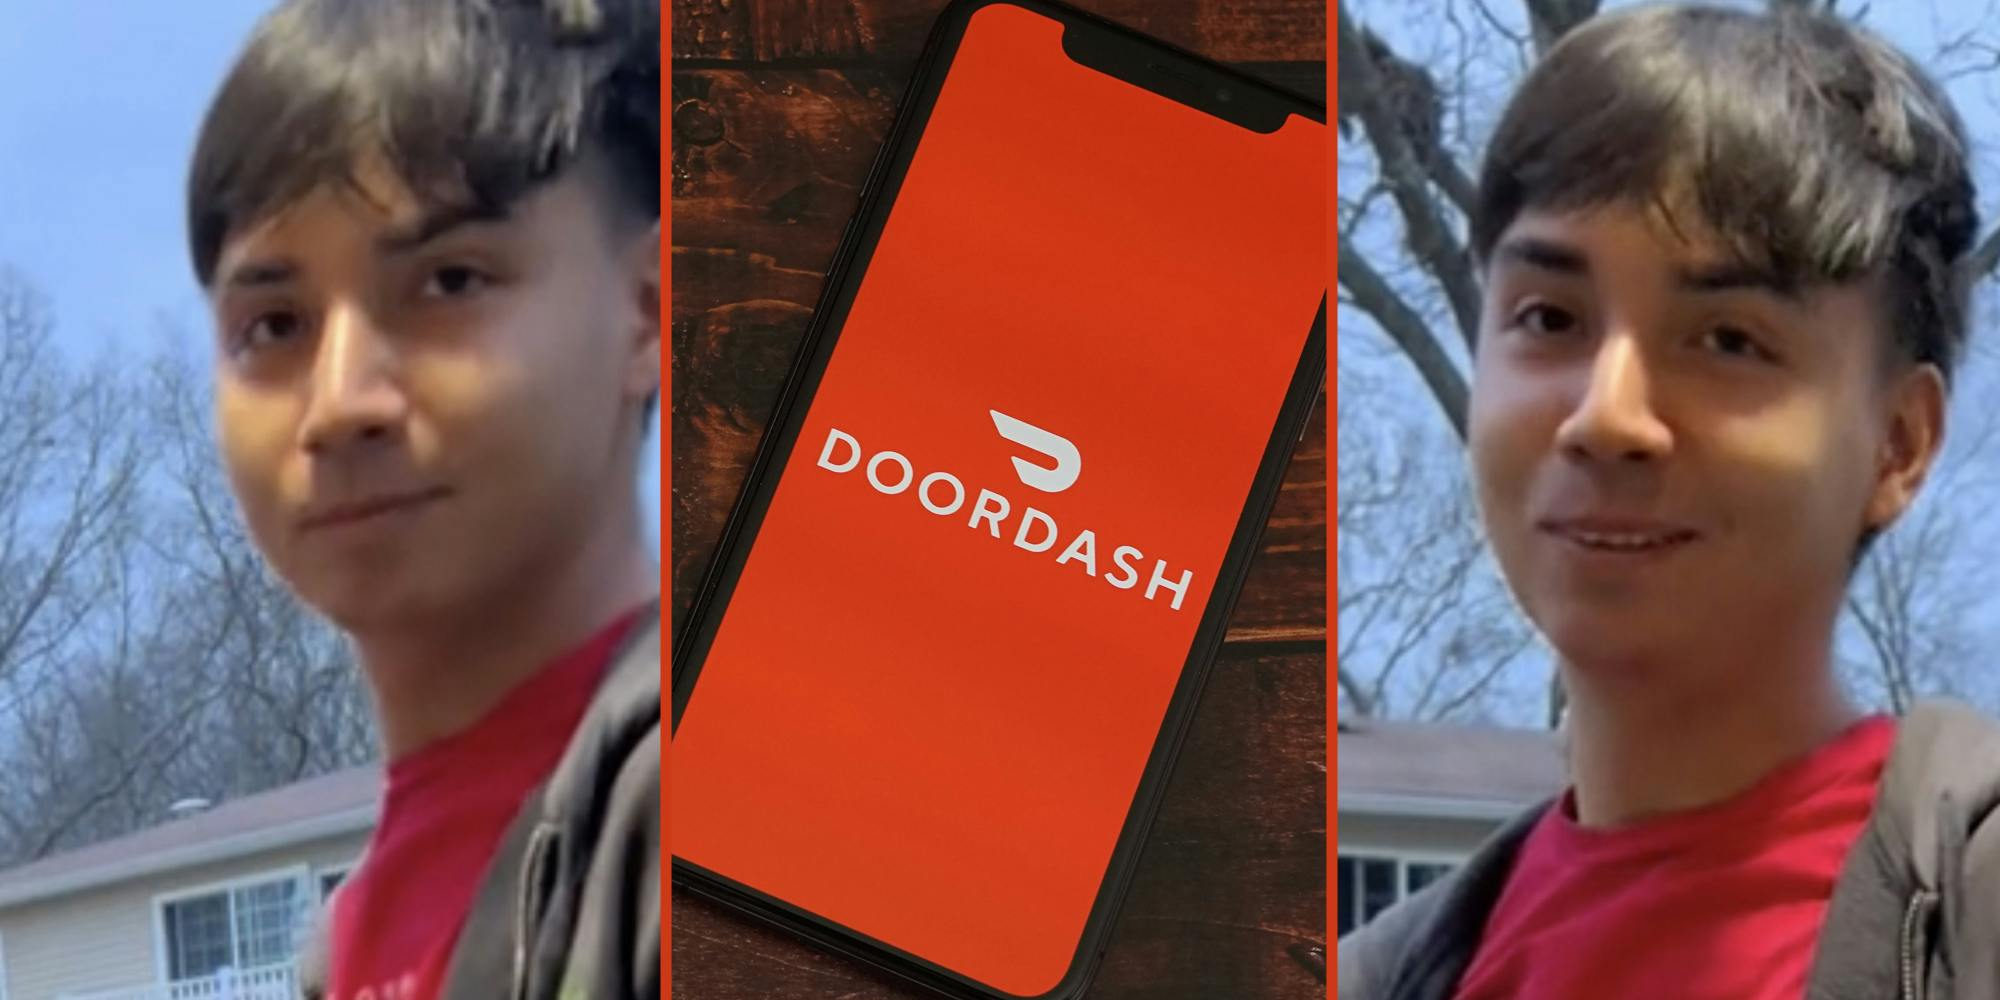 Doordasher caught(l+r), Doordash app on phone(c)